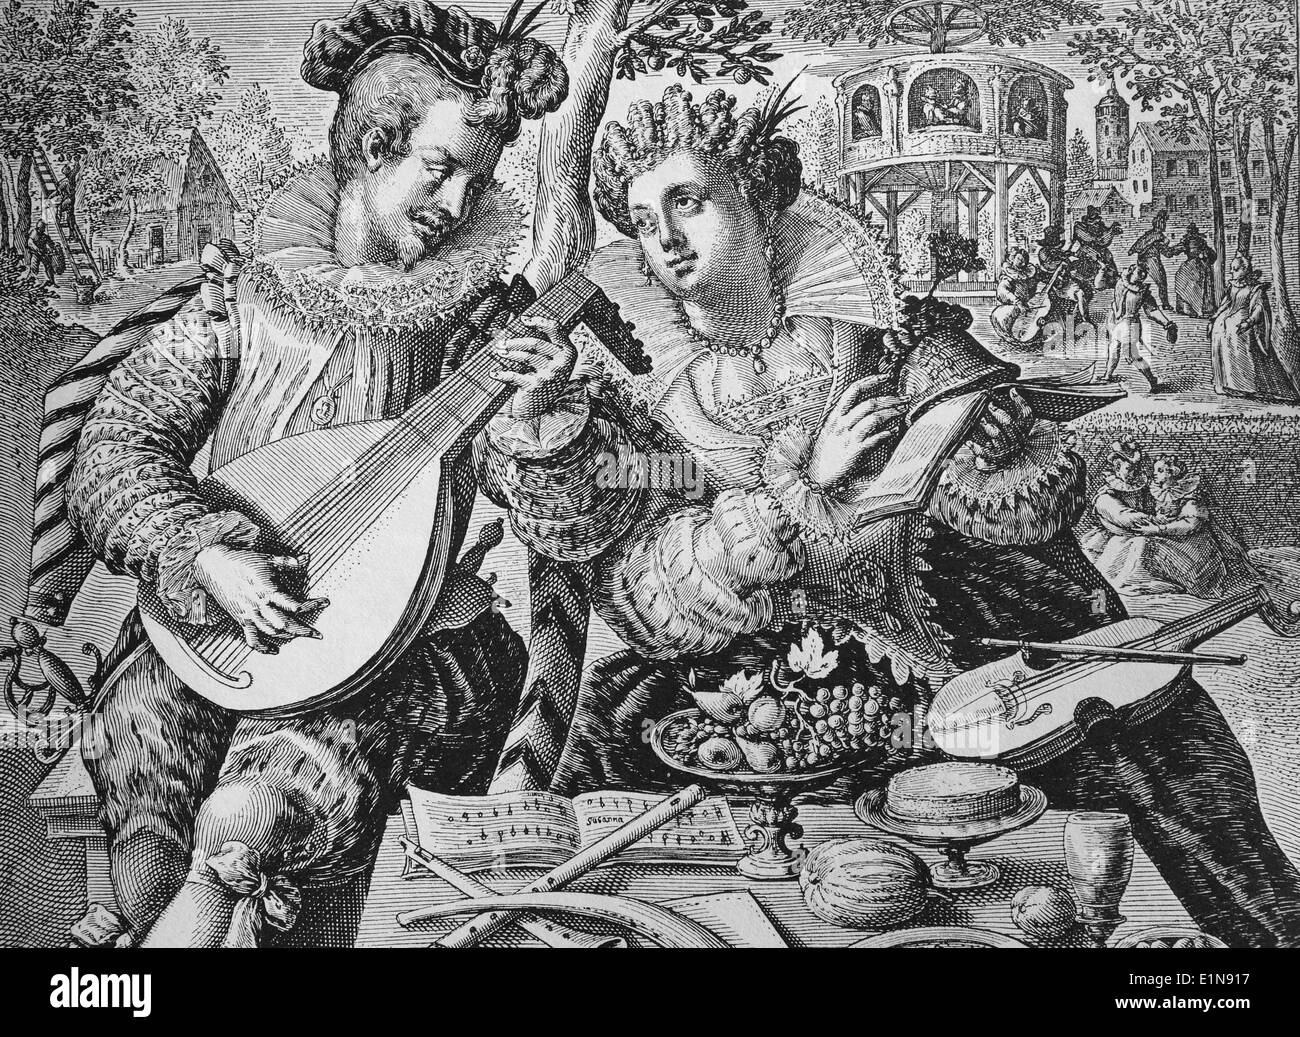 Europa. Renaissance. Musiken. Lautenspieler und Geiger. 16. Jahrhundert. Gravur. Stockfoto